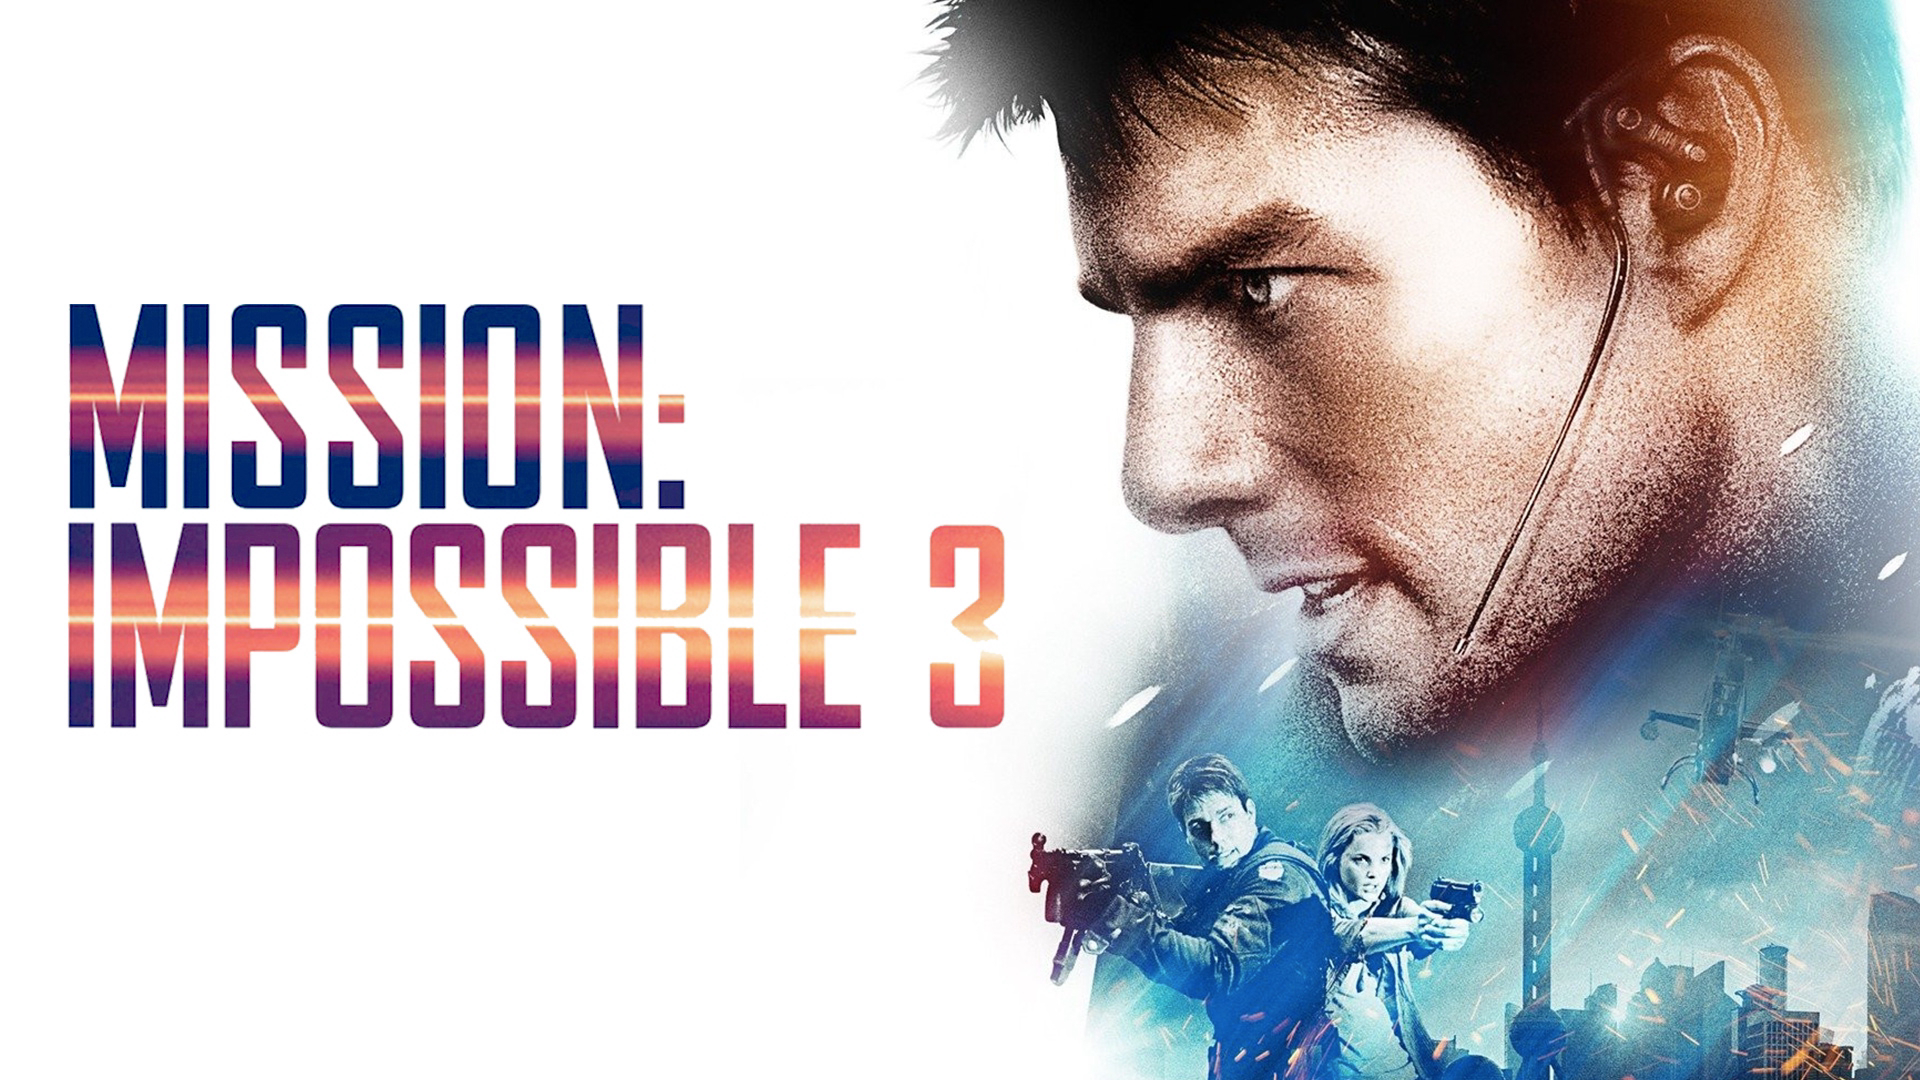 Nhiệm vụ bất khả thi 3 - Mission: Impossible III (2006)